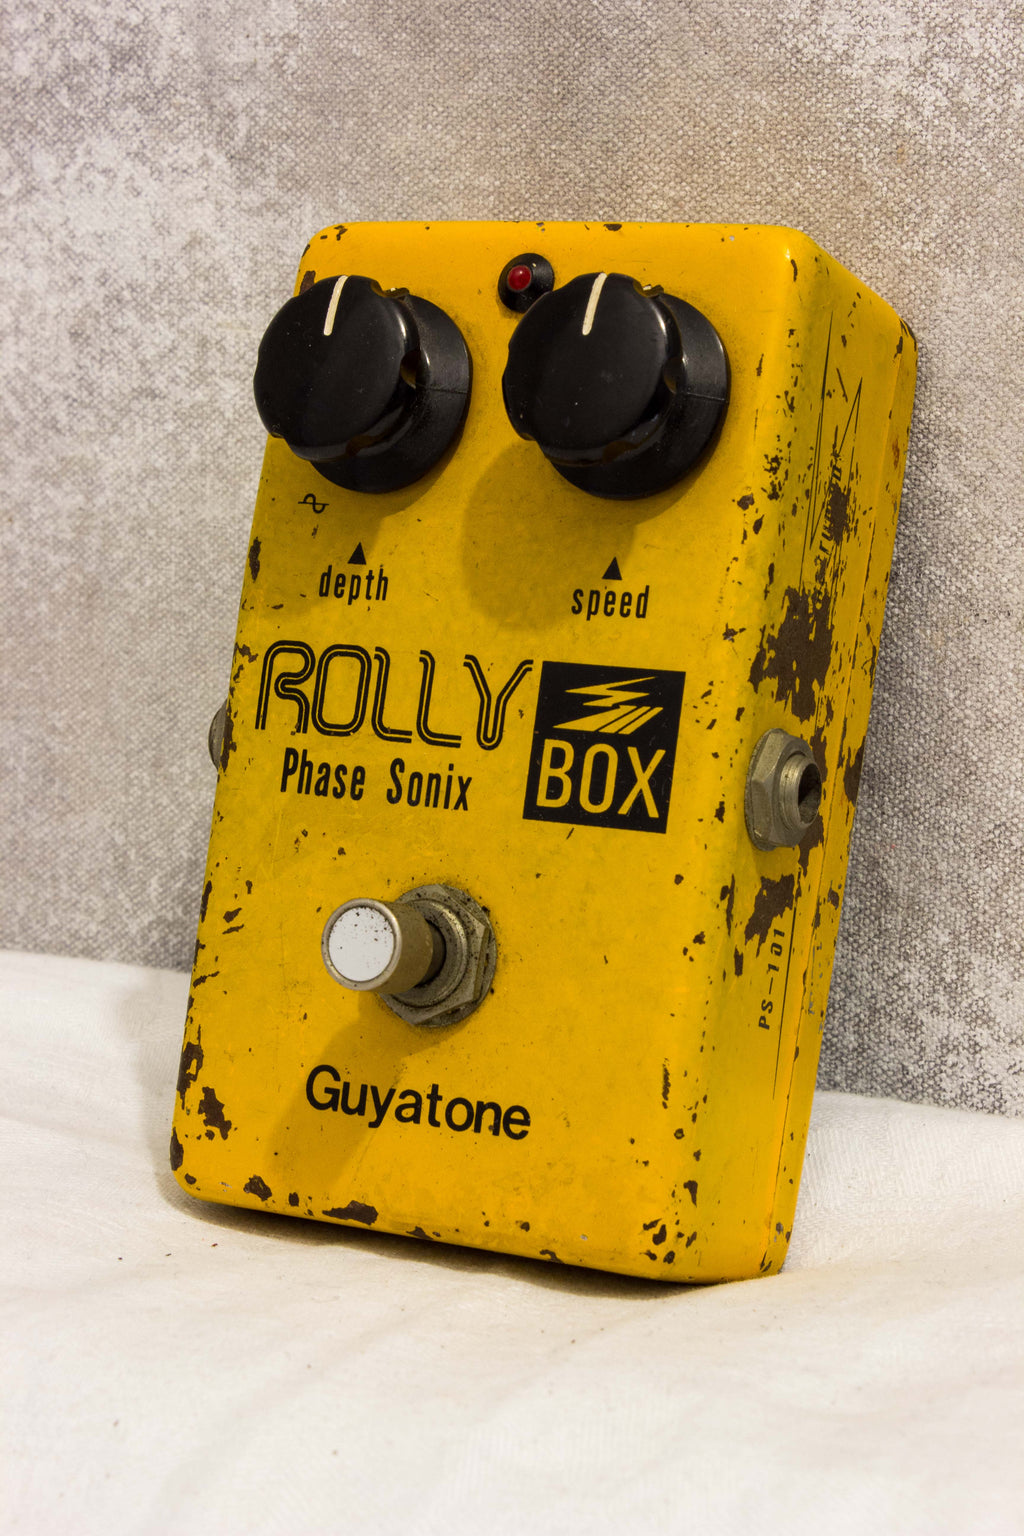 Guyatone Rolly Box Phase Sonix Phaser Pedal c1978